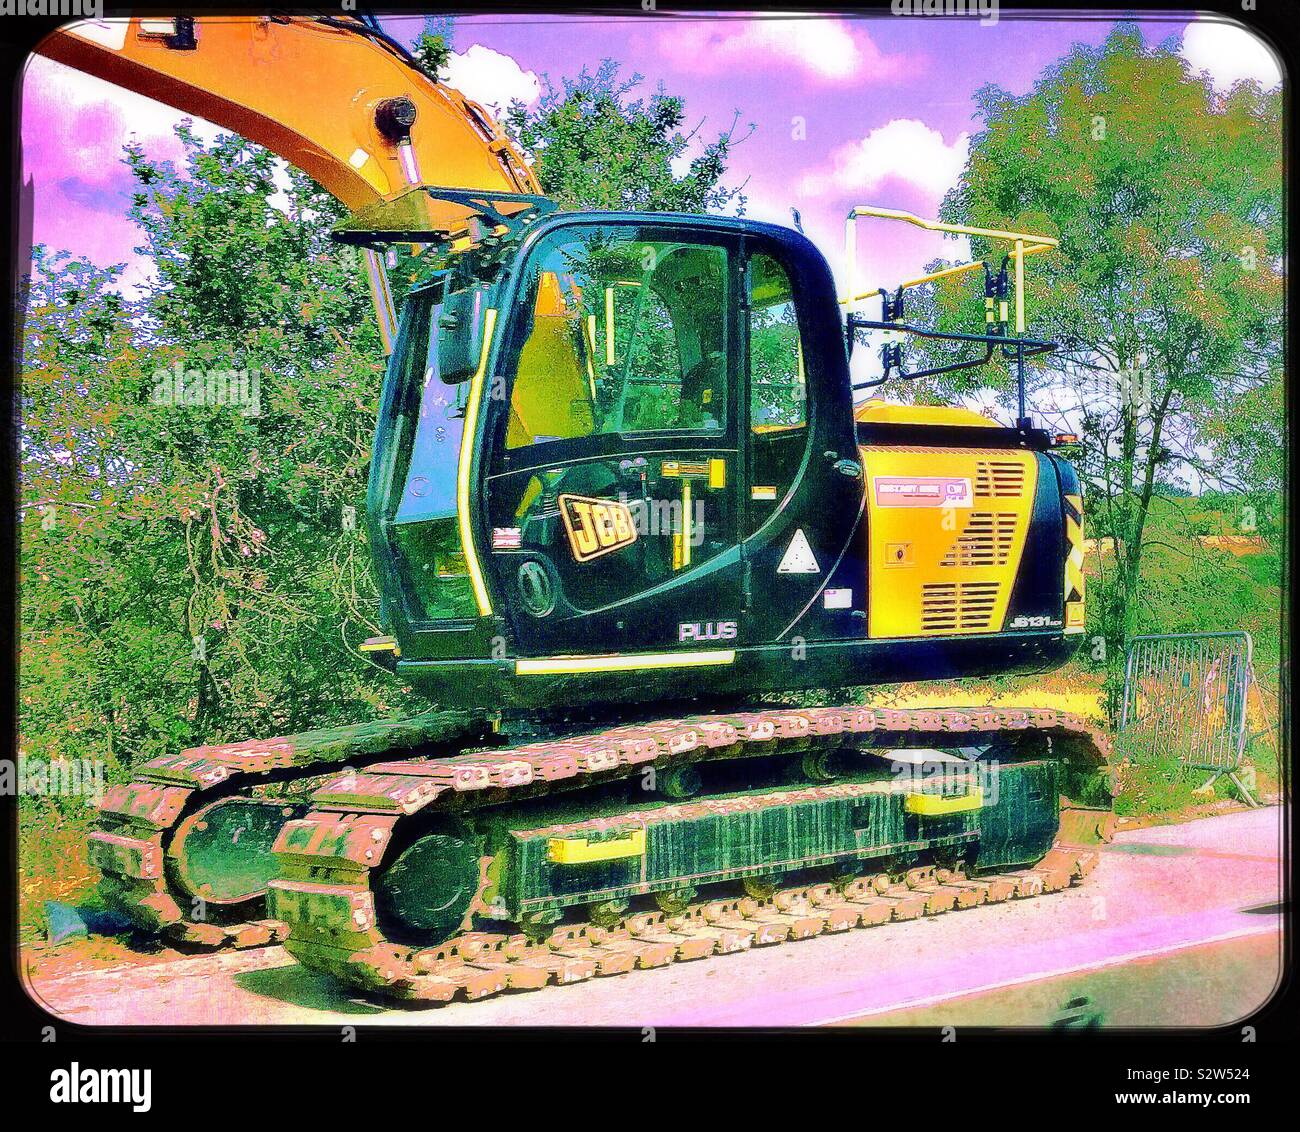 Heavy machinery vehicle with caterpillar tracks Stock Photo